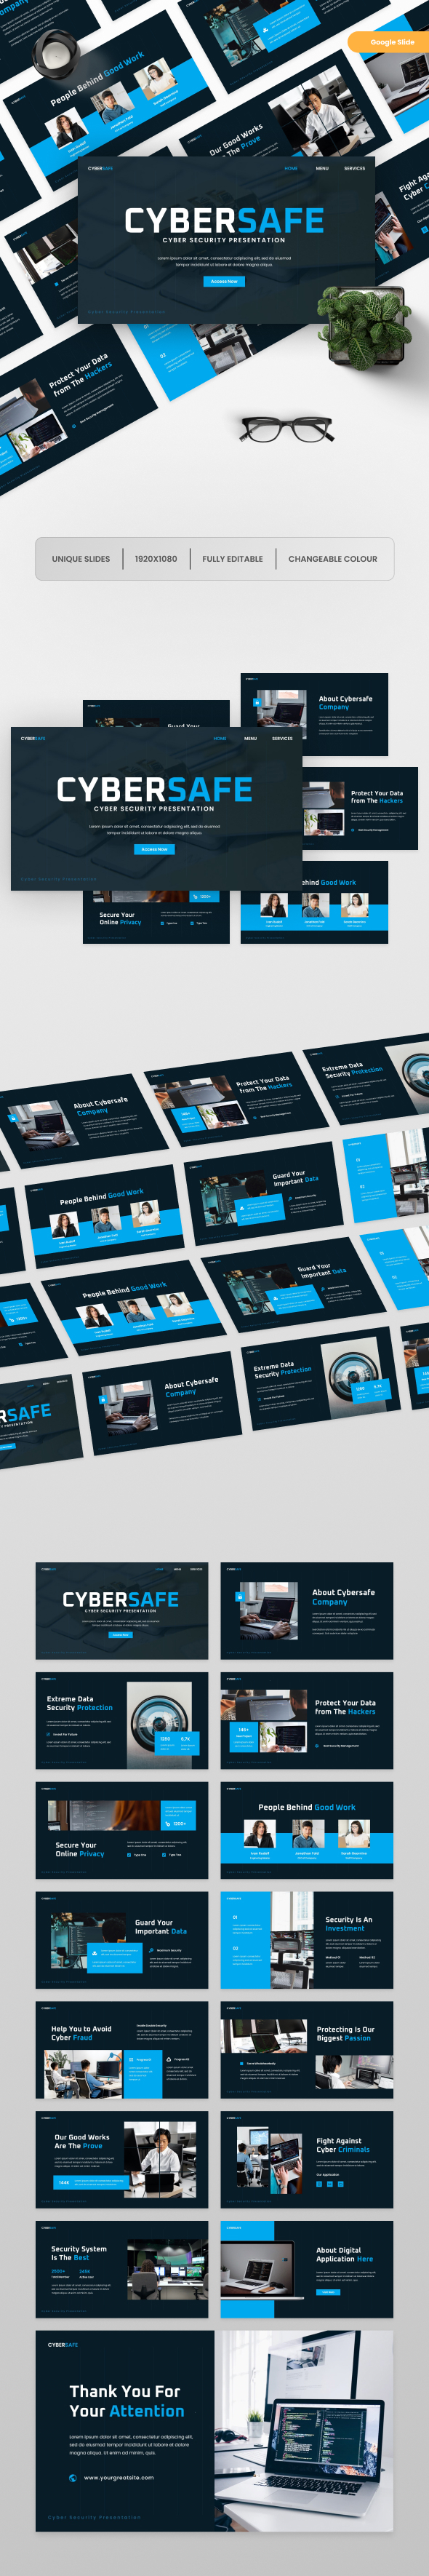 Cybersafe - Cyber Security Google Slide Template